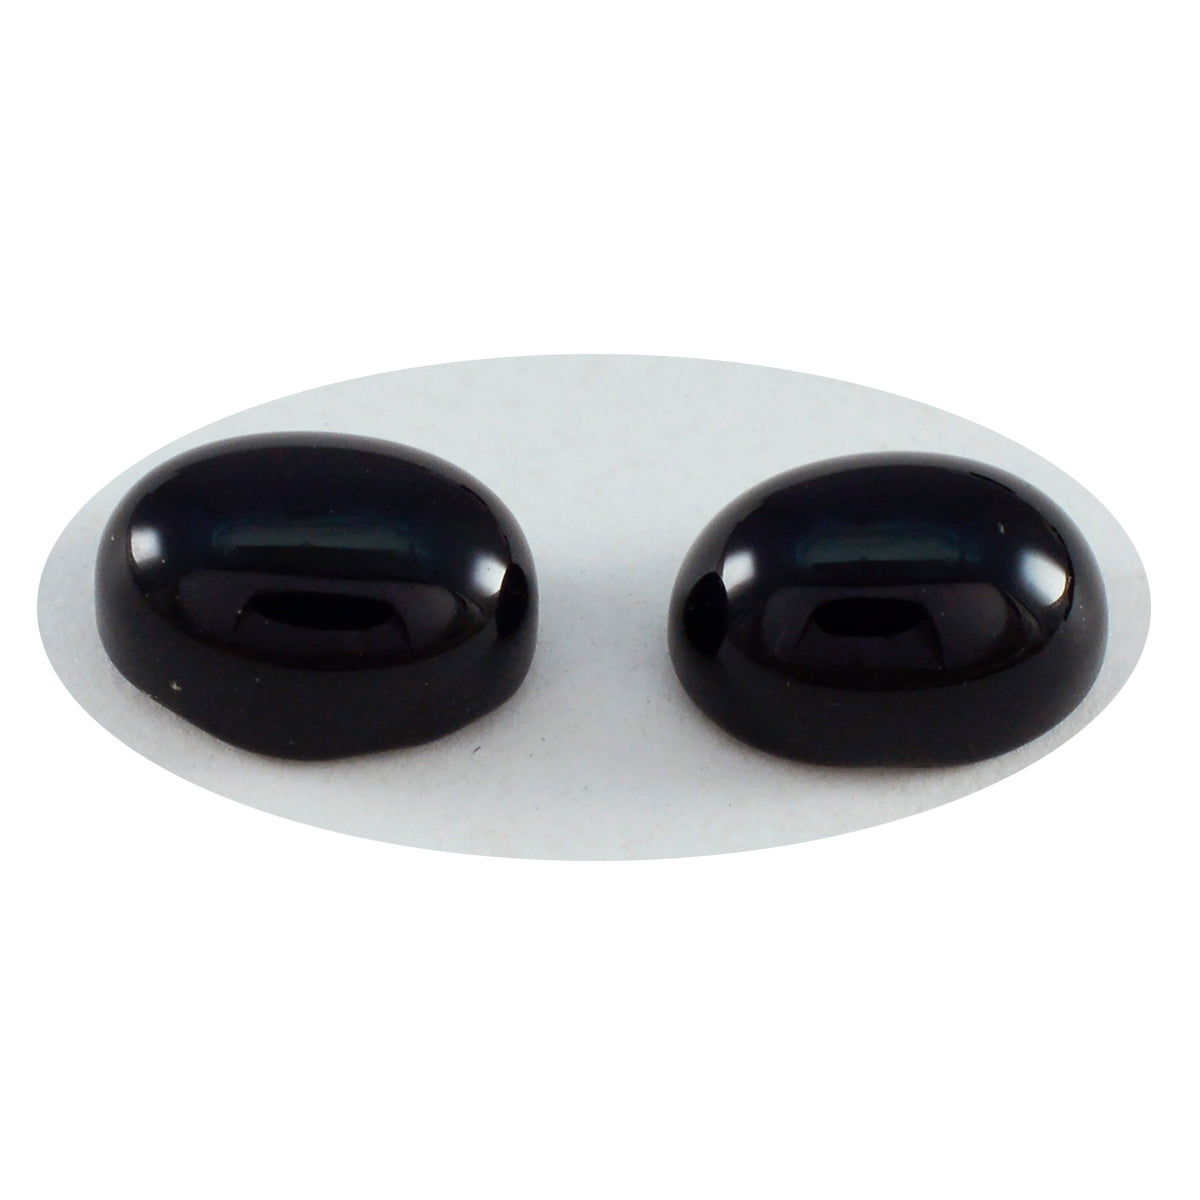 Riyogems 1PC Black Onyx Cabochon 7x9 mm Oval Shape astonishing Quality Loose Gems